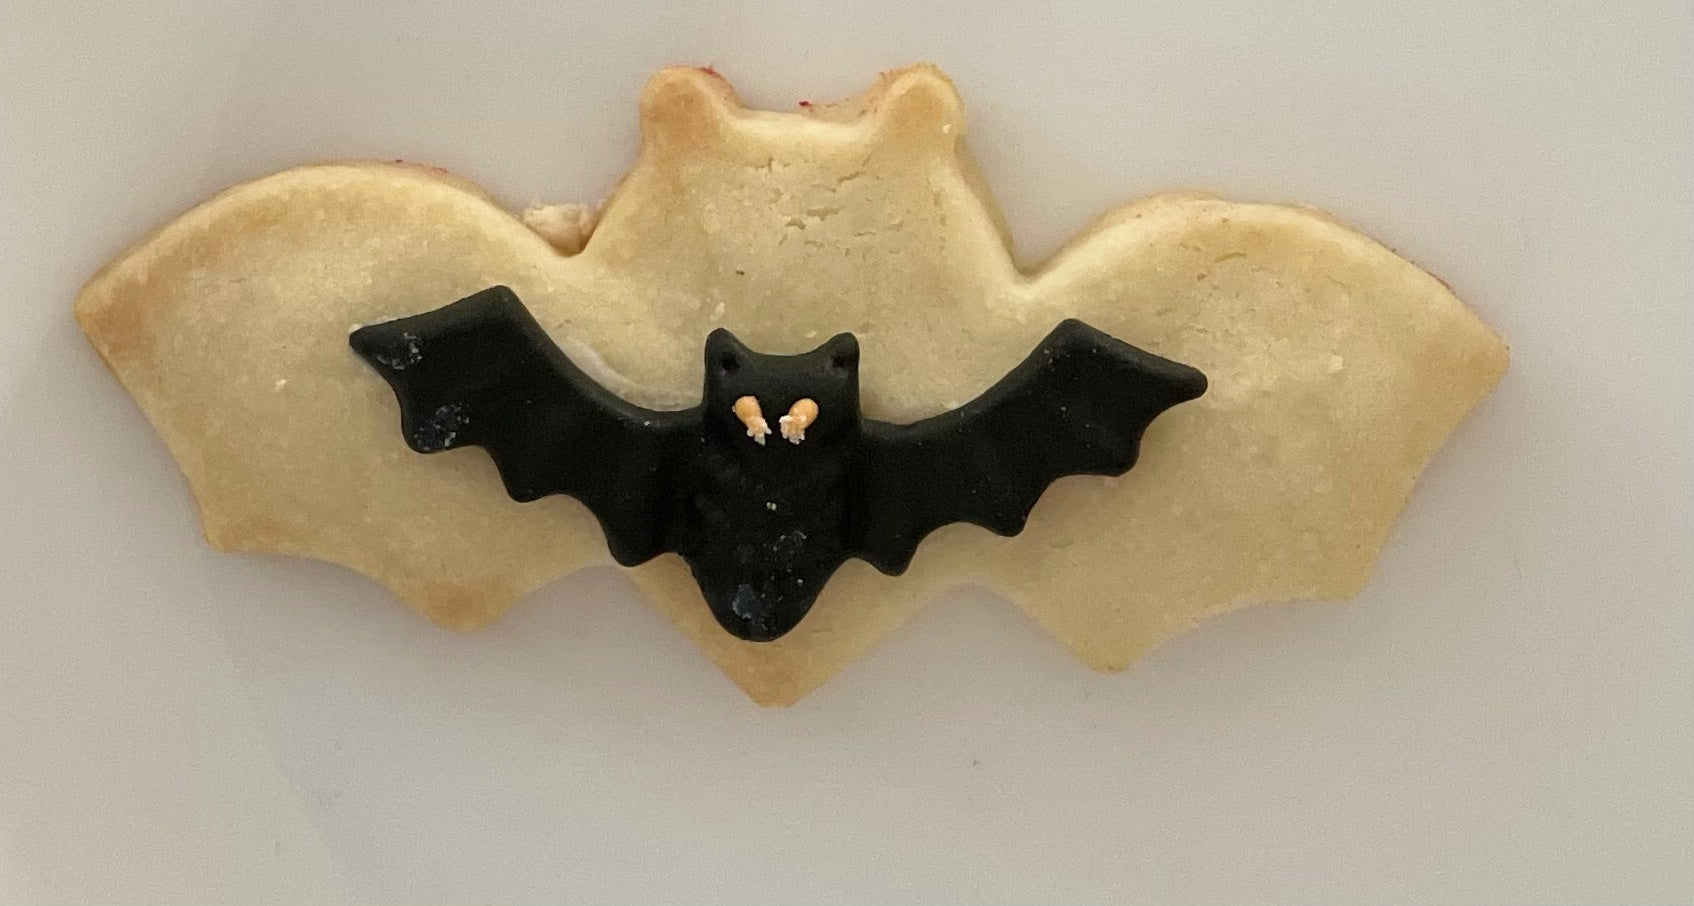 Bat Shaped Sugar Cookie